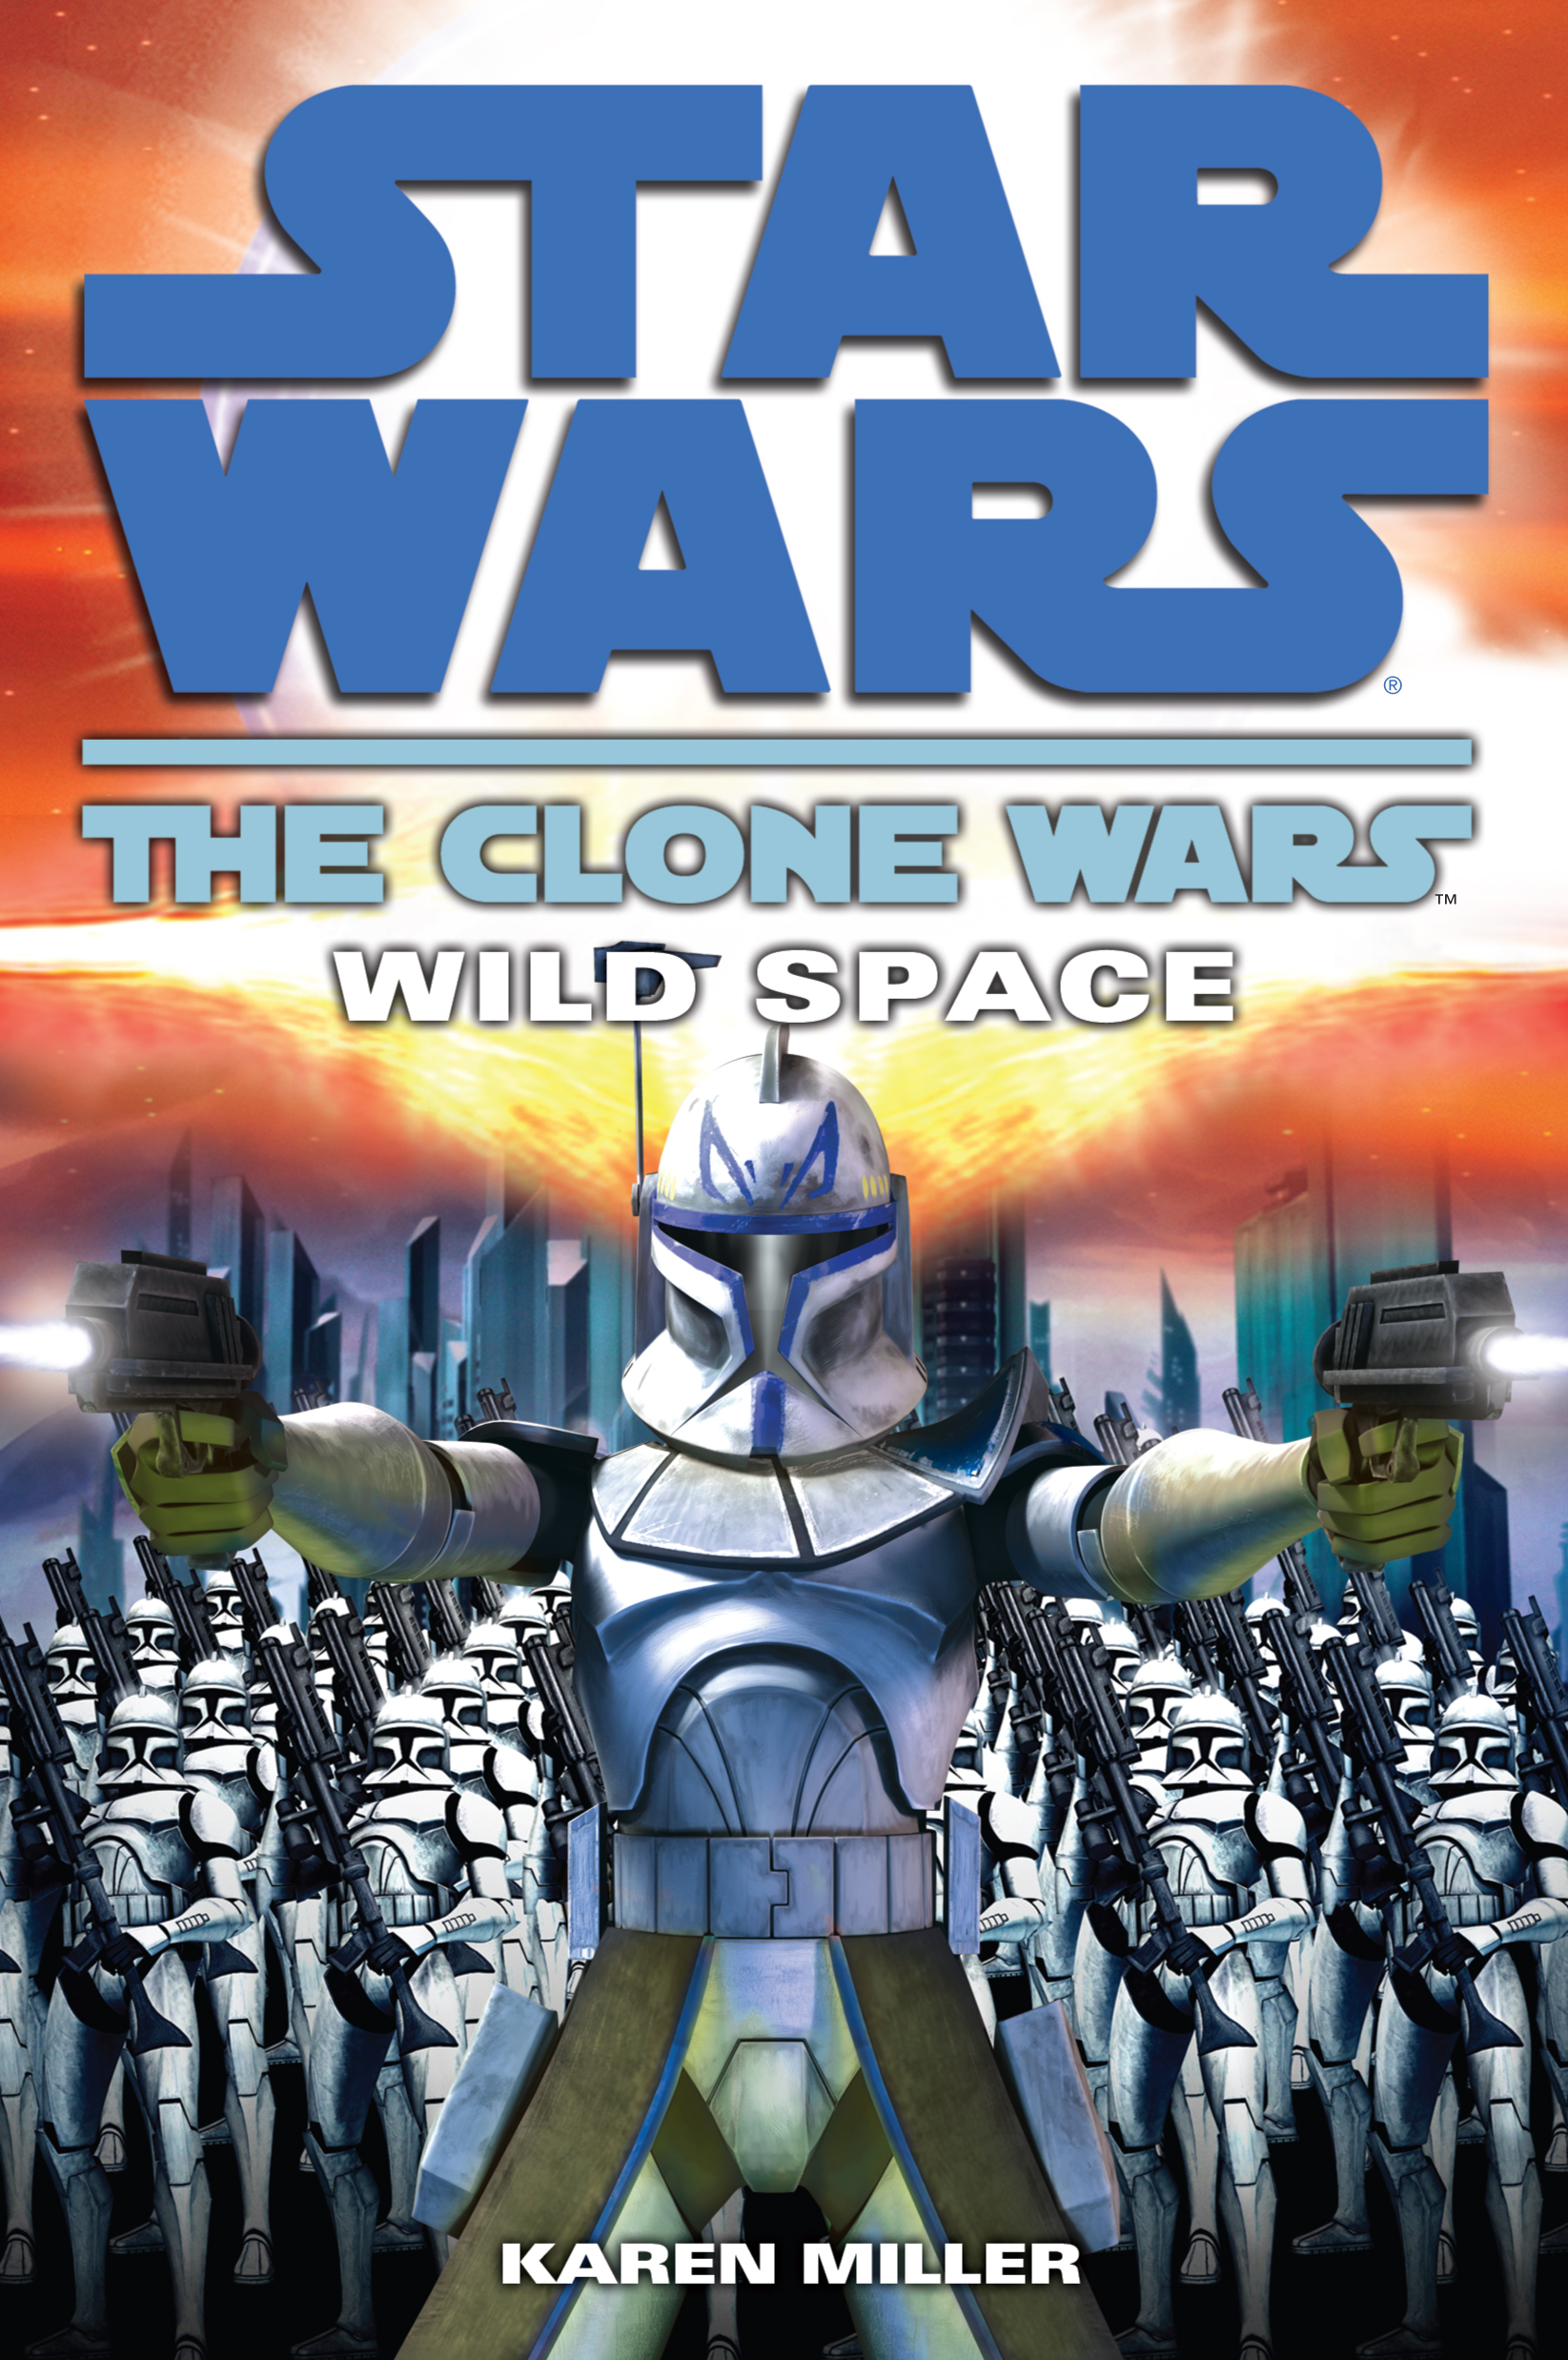 The Clone Wars Wild Space Wookieepedia Fandom